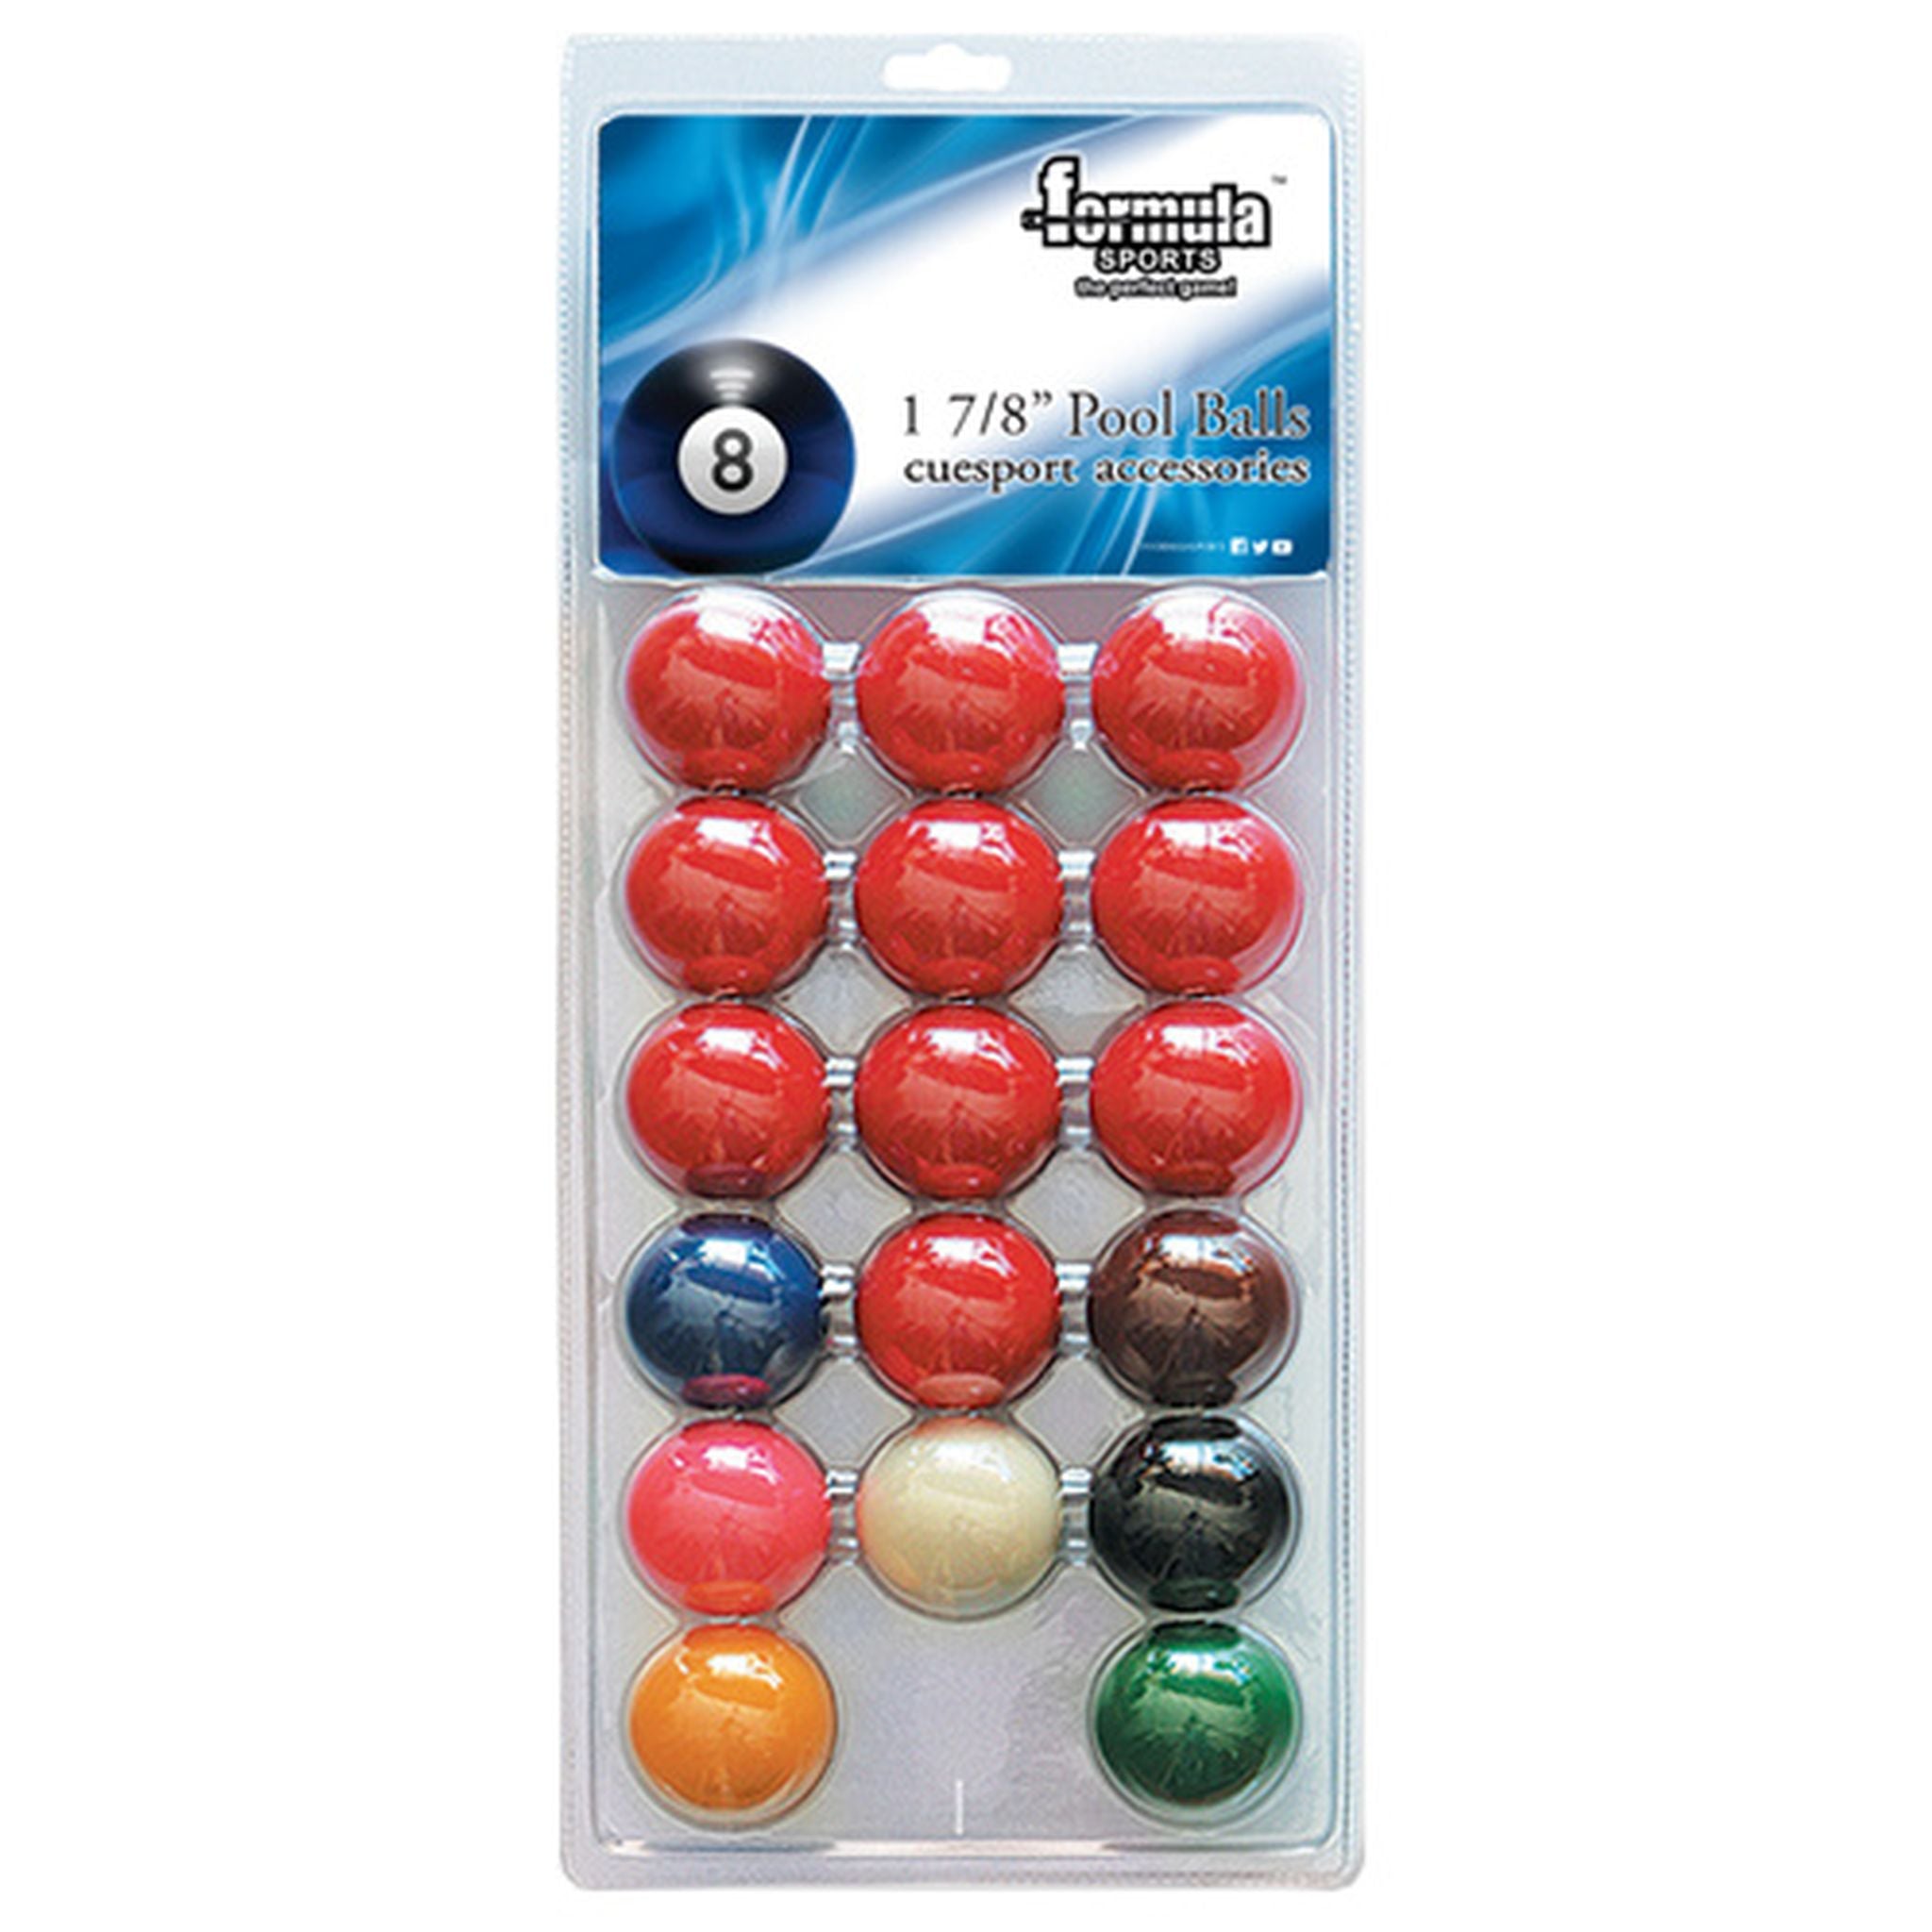 Formula Standard Snooker Balls - 2-inch